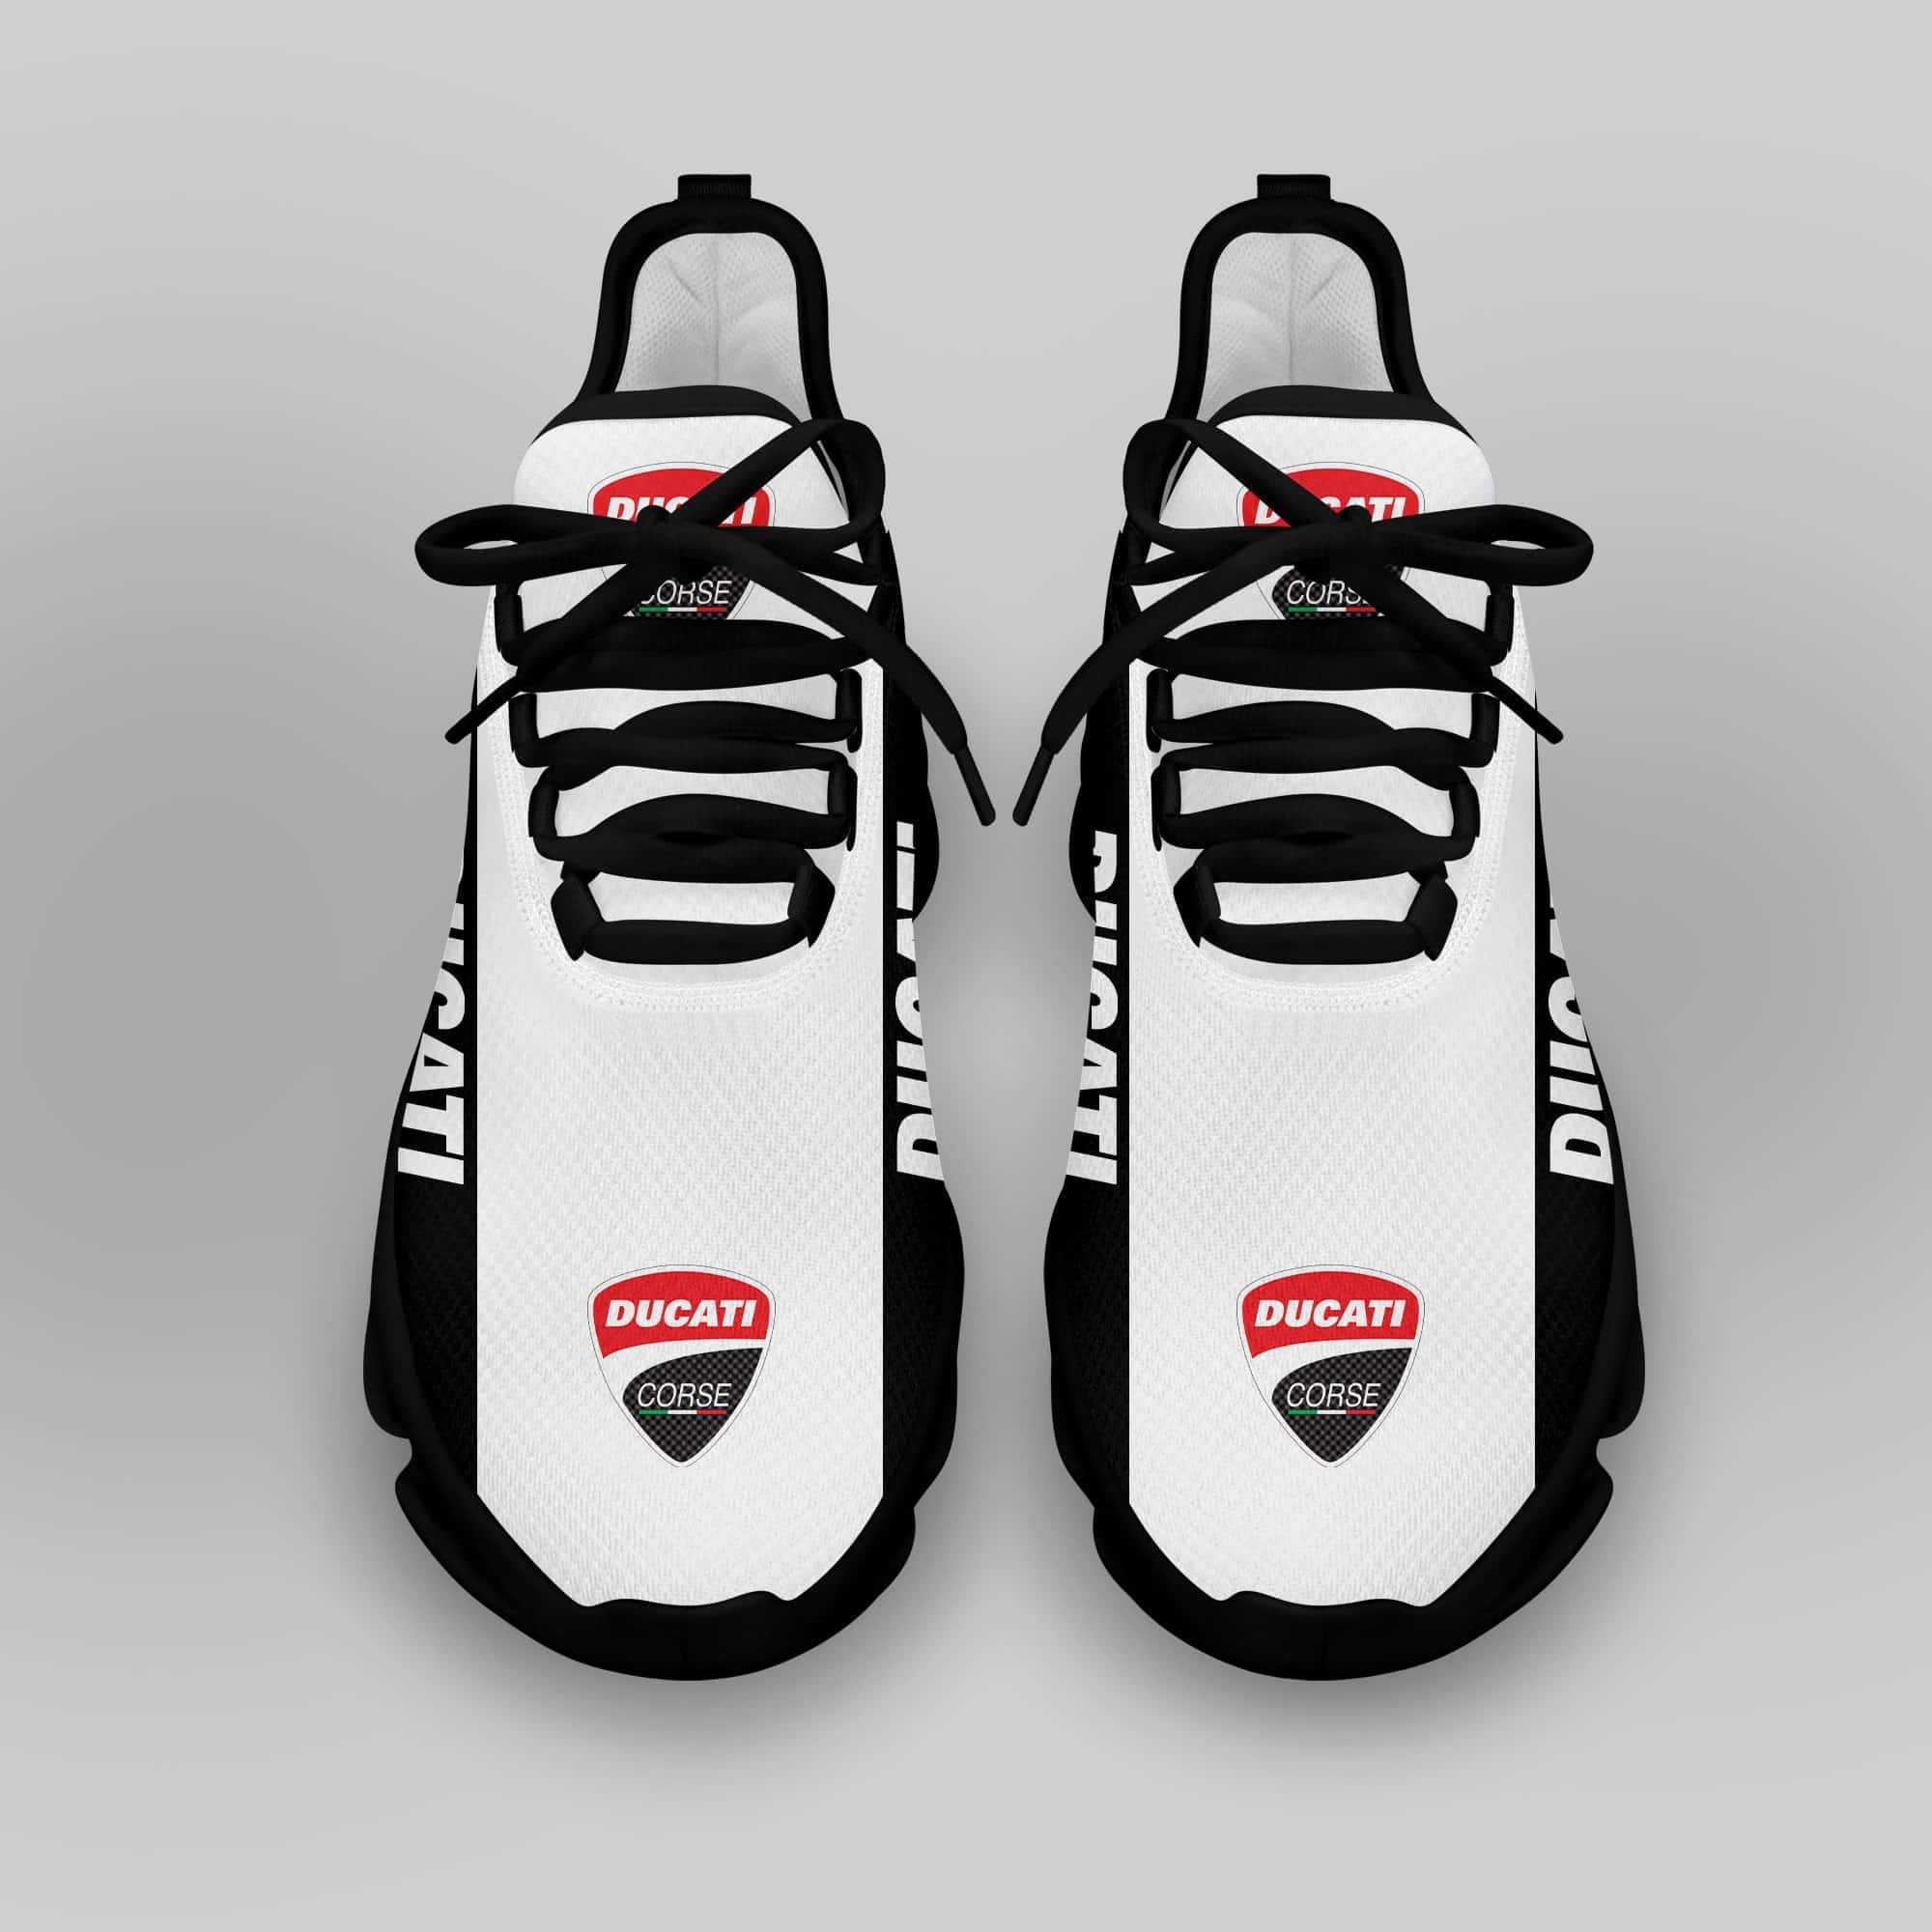 Ducati Racing Running Shoes Max Soul Shoes Sneakers Ver 40 4